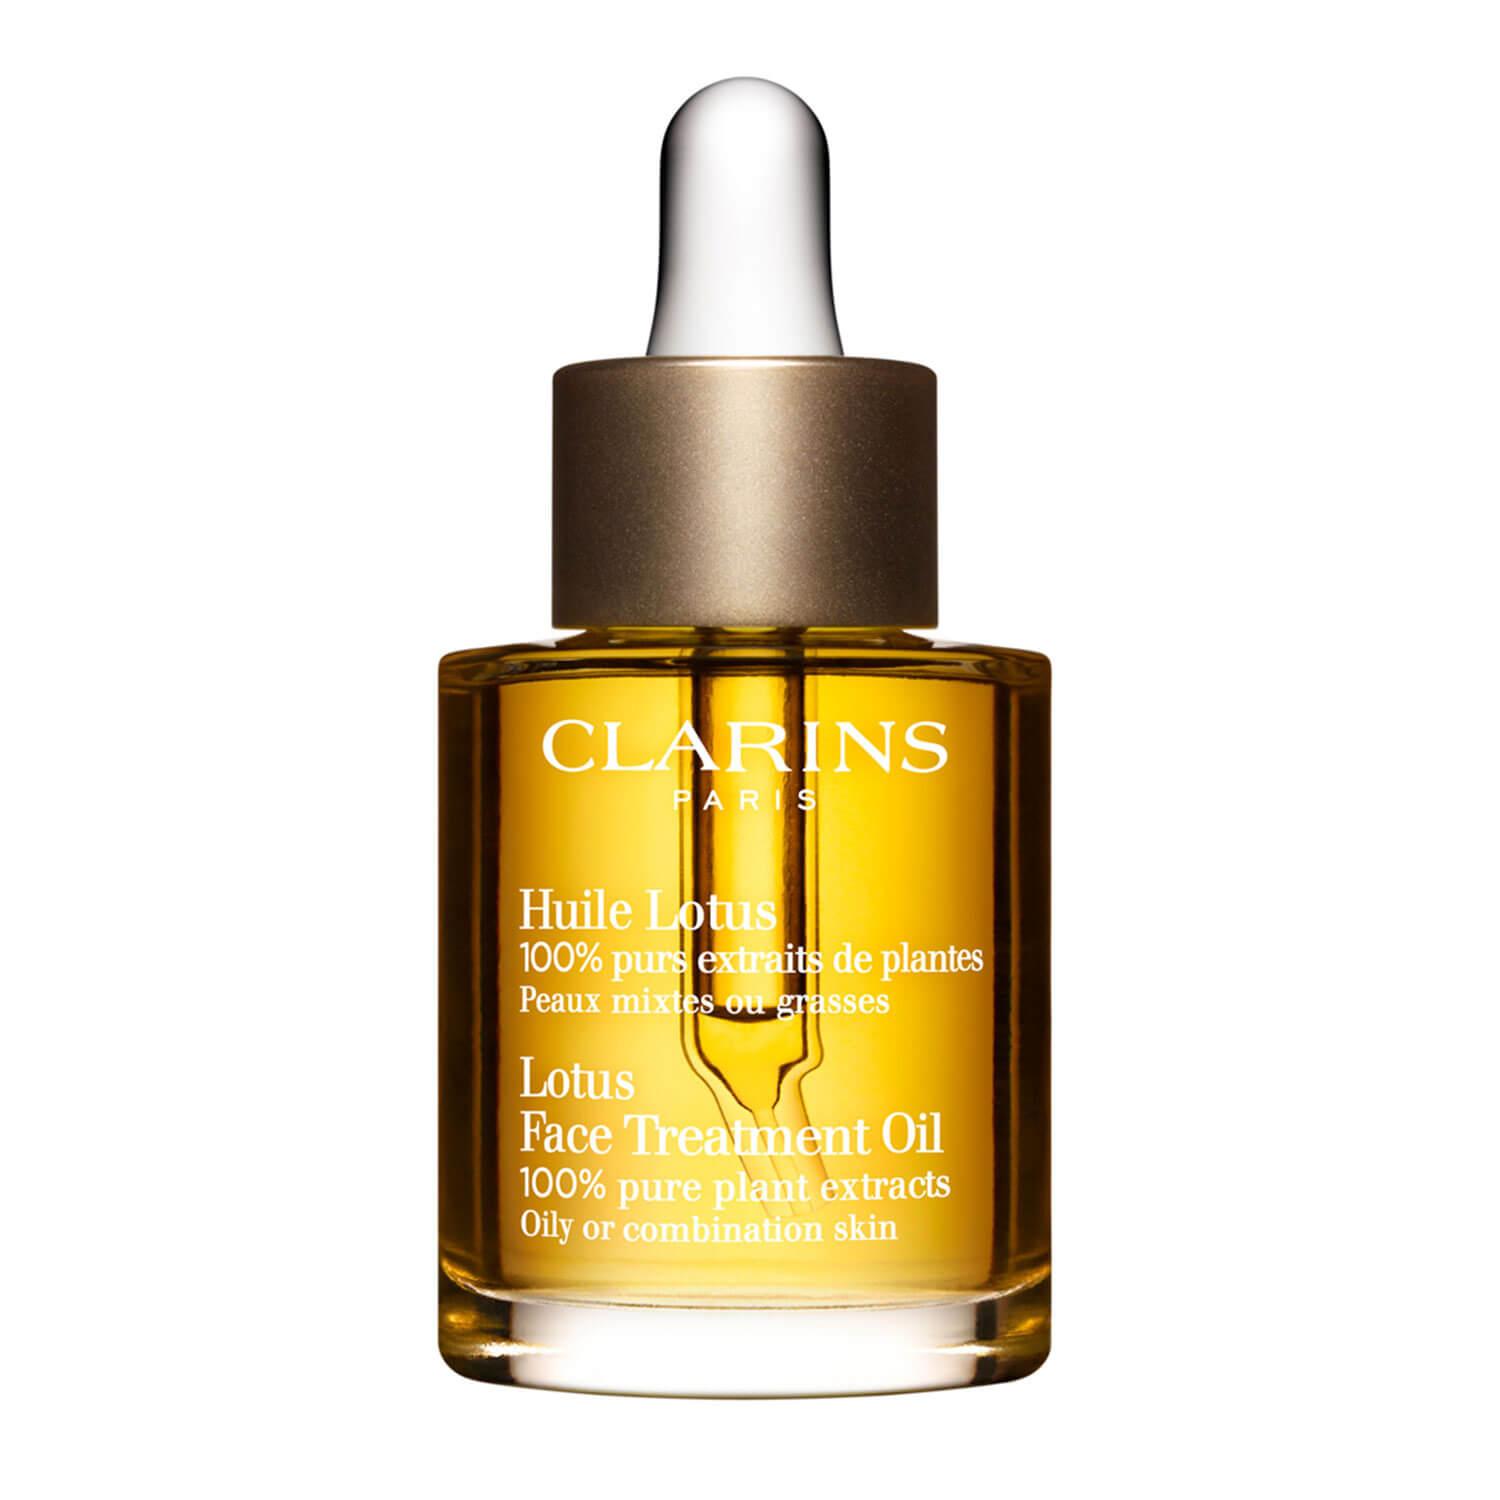 Clarins Skin - Lotus Face Treatment Oil